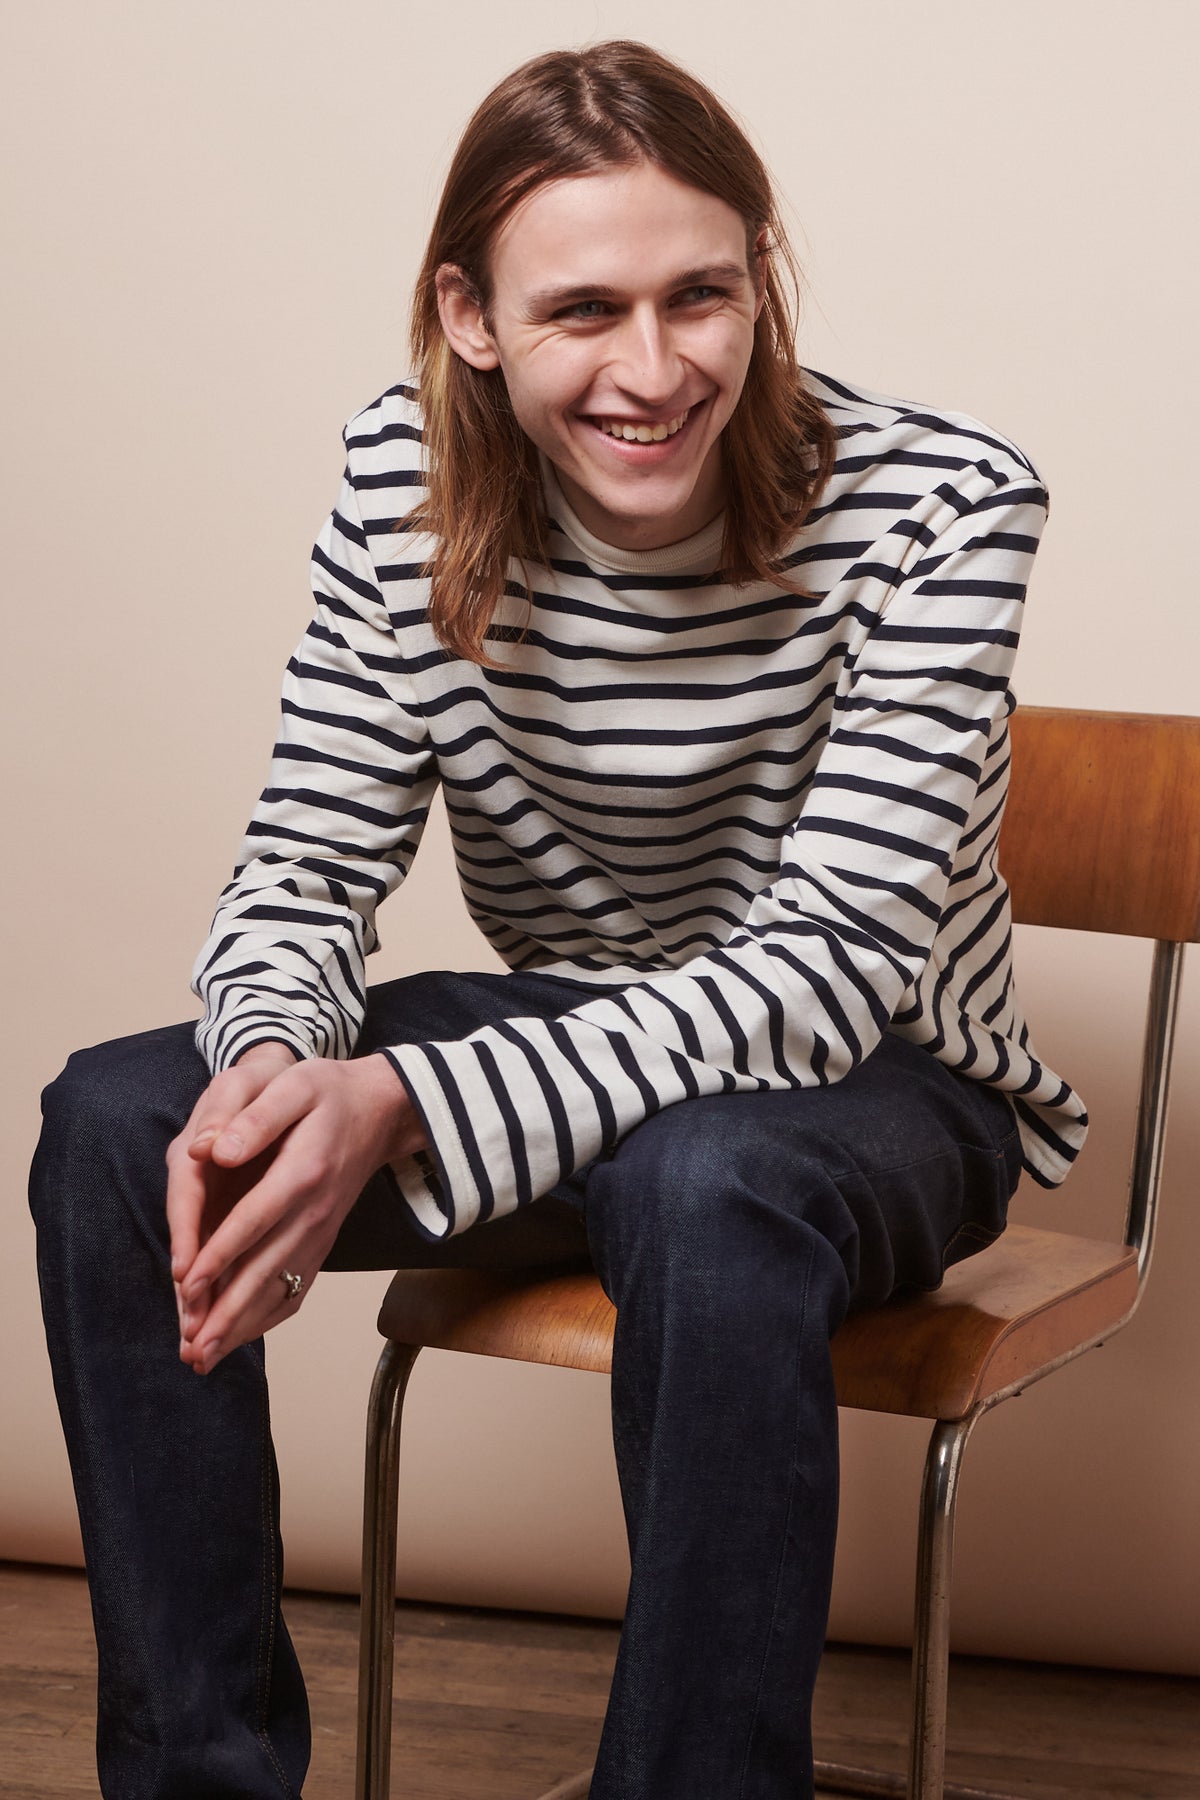 
            Smiley male with shoulder length brown hair sat on chair wearing Breton in ecru navy